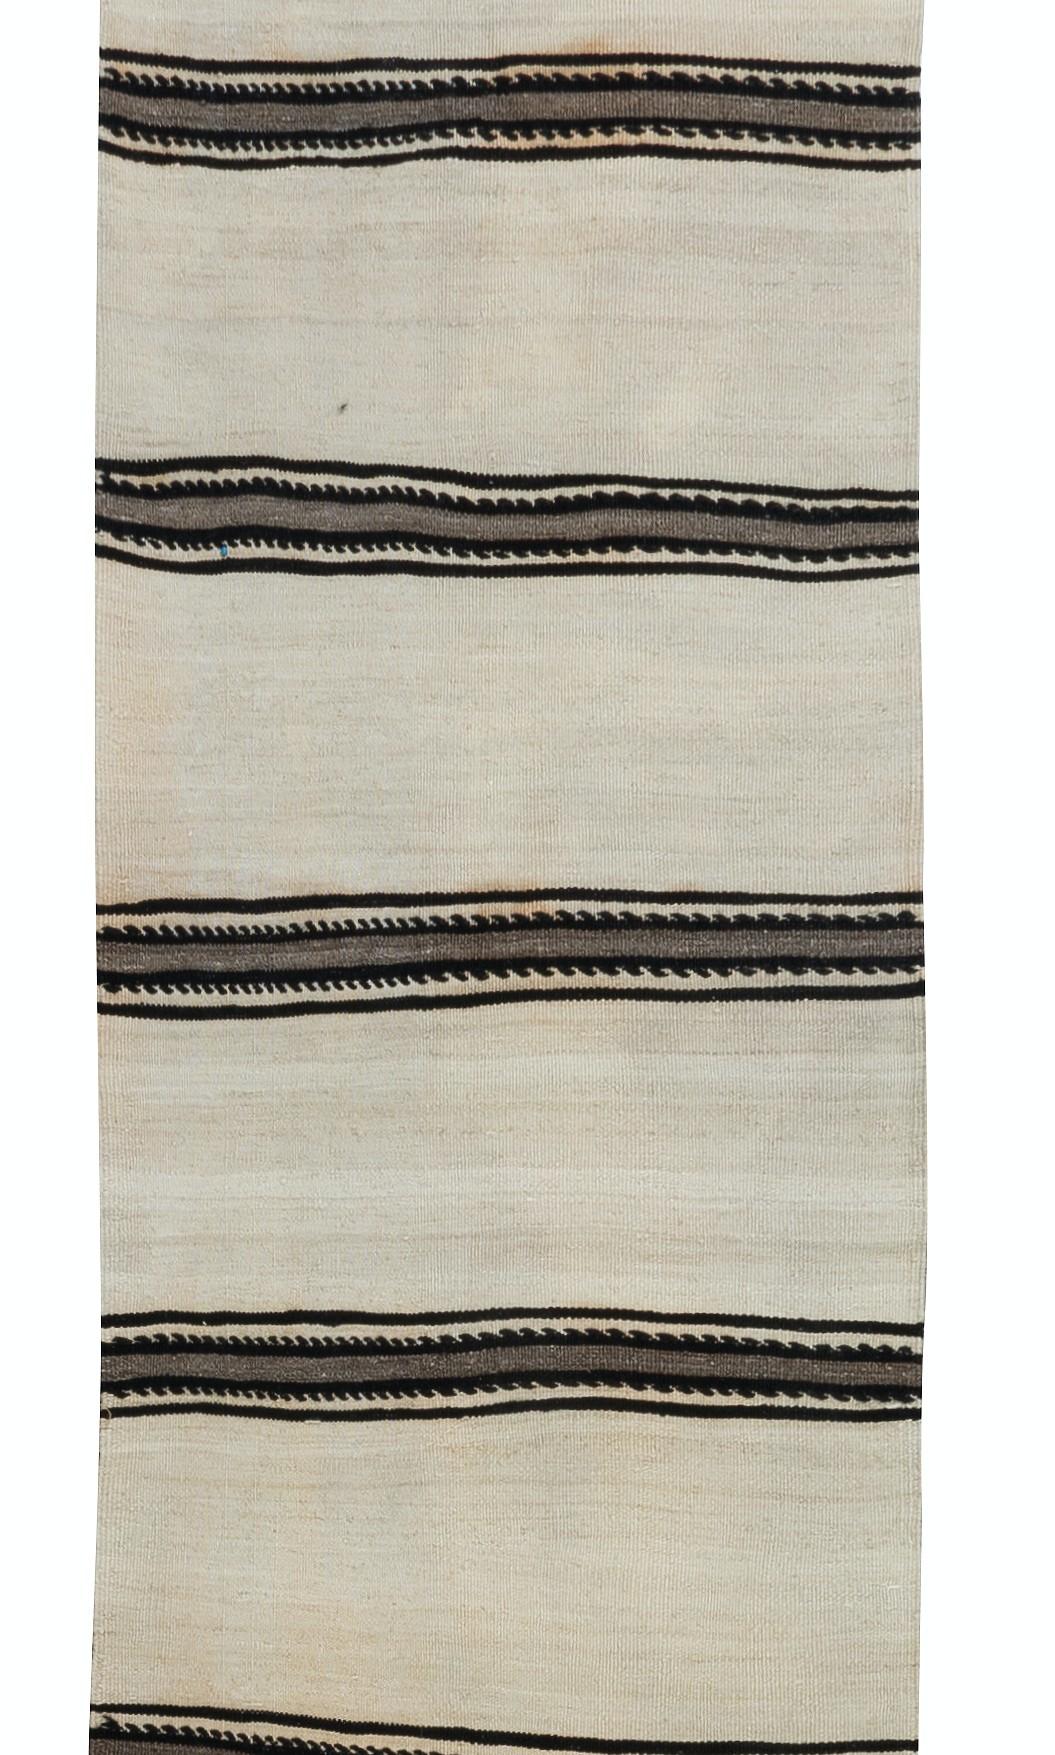 Hand-Woven 2.2x17.6 Ft Handmade Cream Narrow & Long Runner Kilim with Black & Gray Stripes For Sale